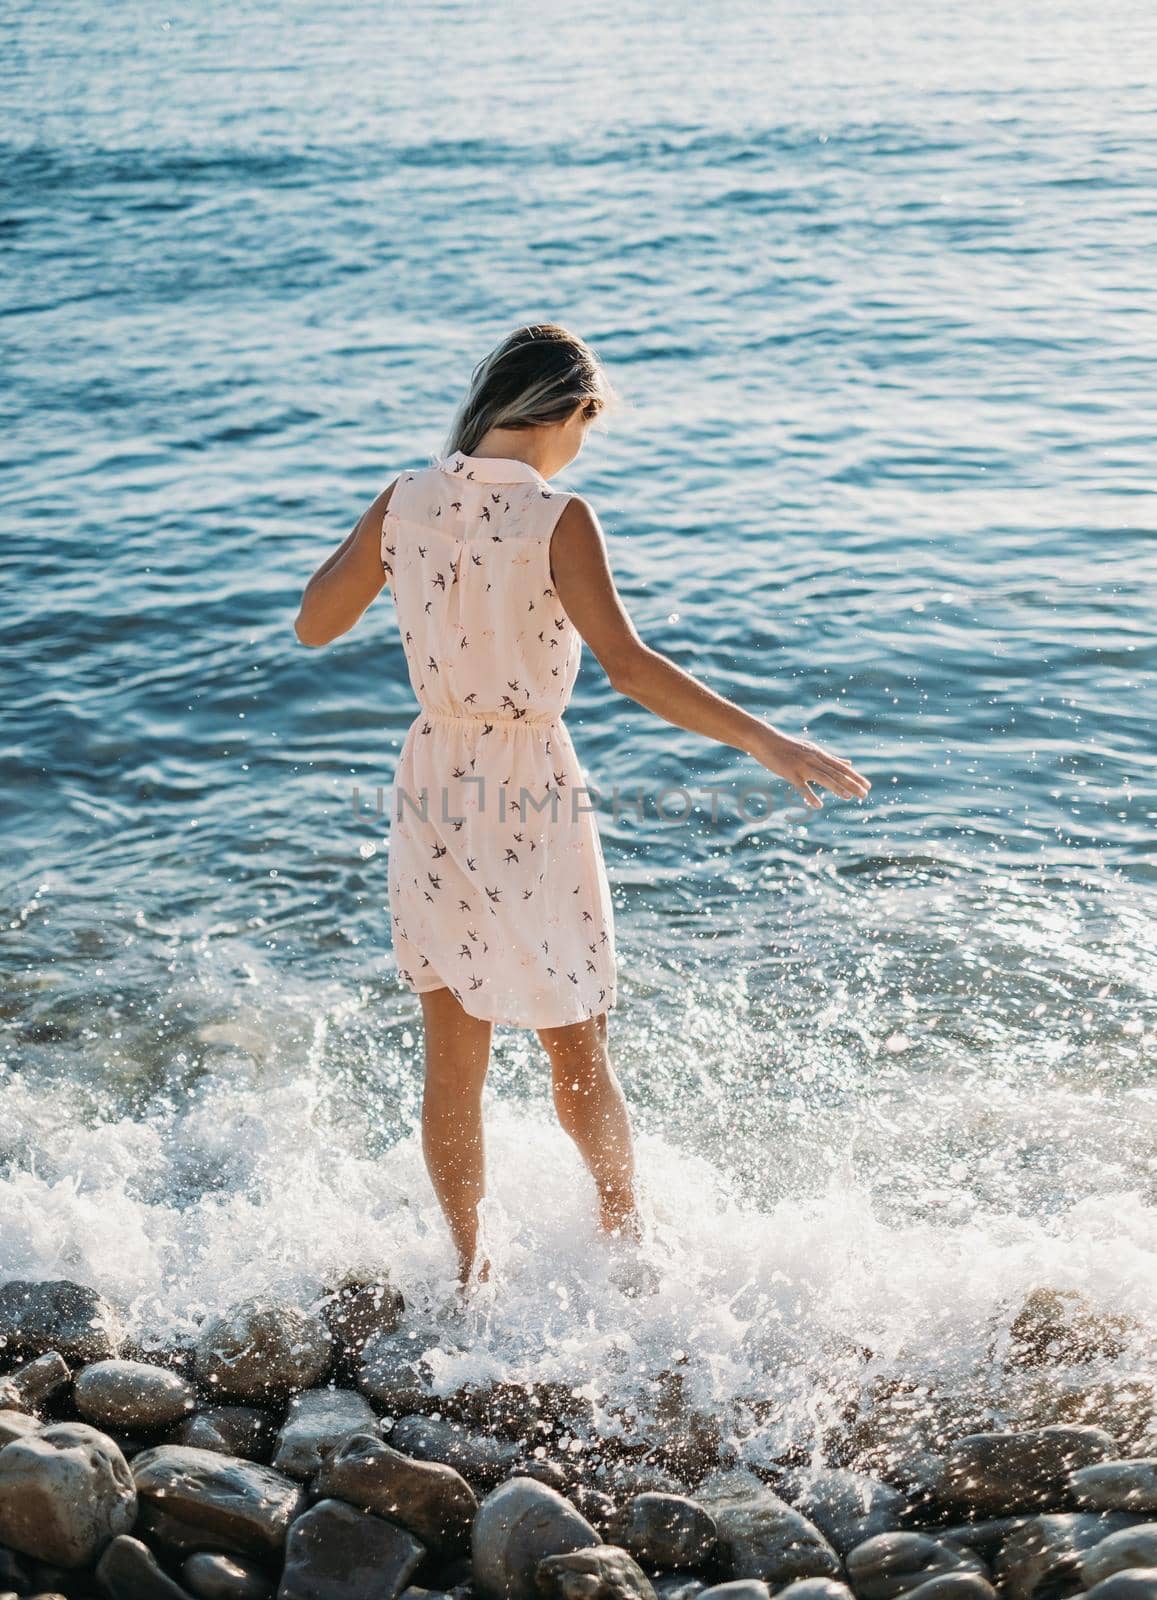 Young woman walking on coastline near sea waves